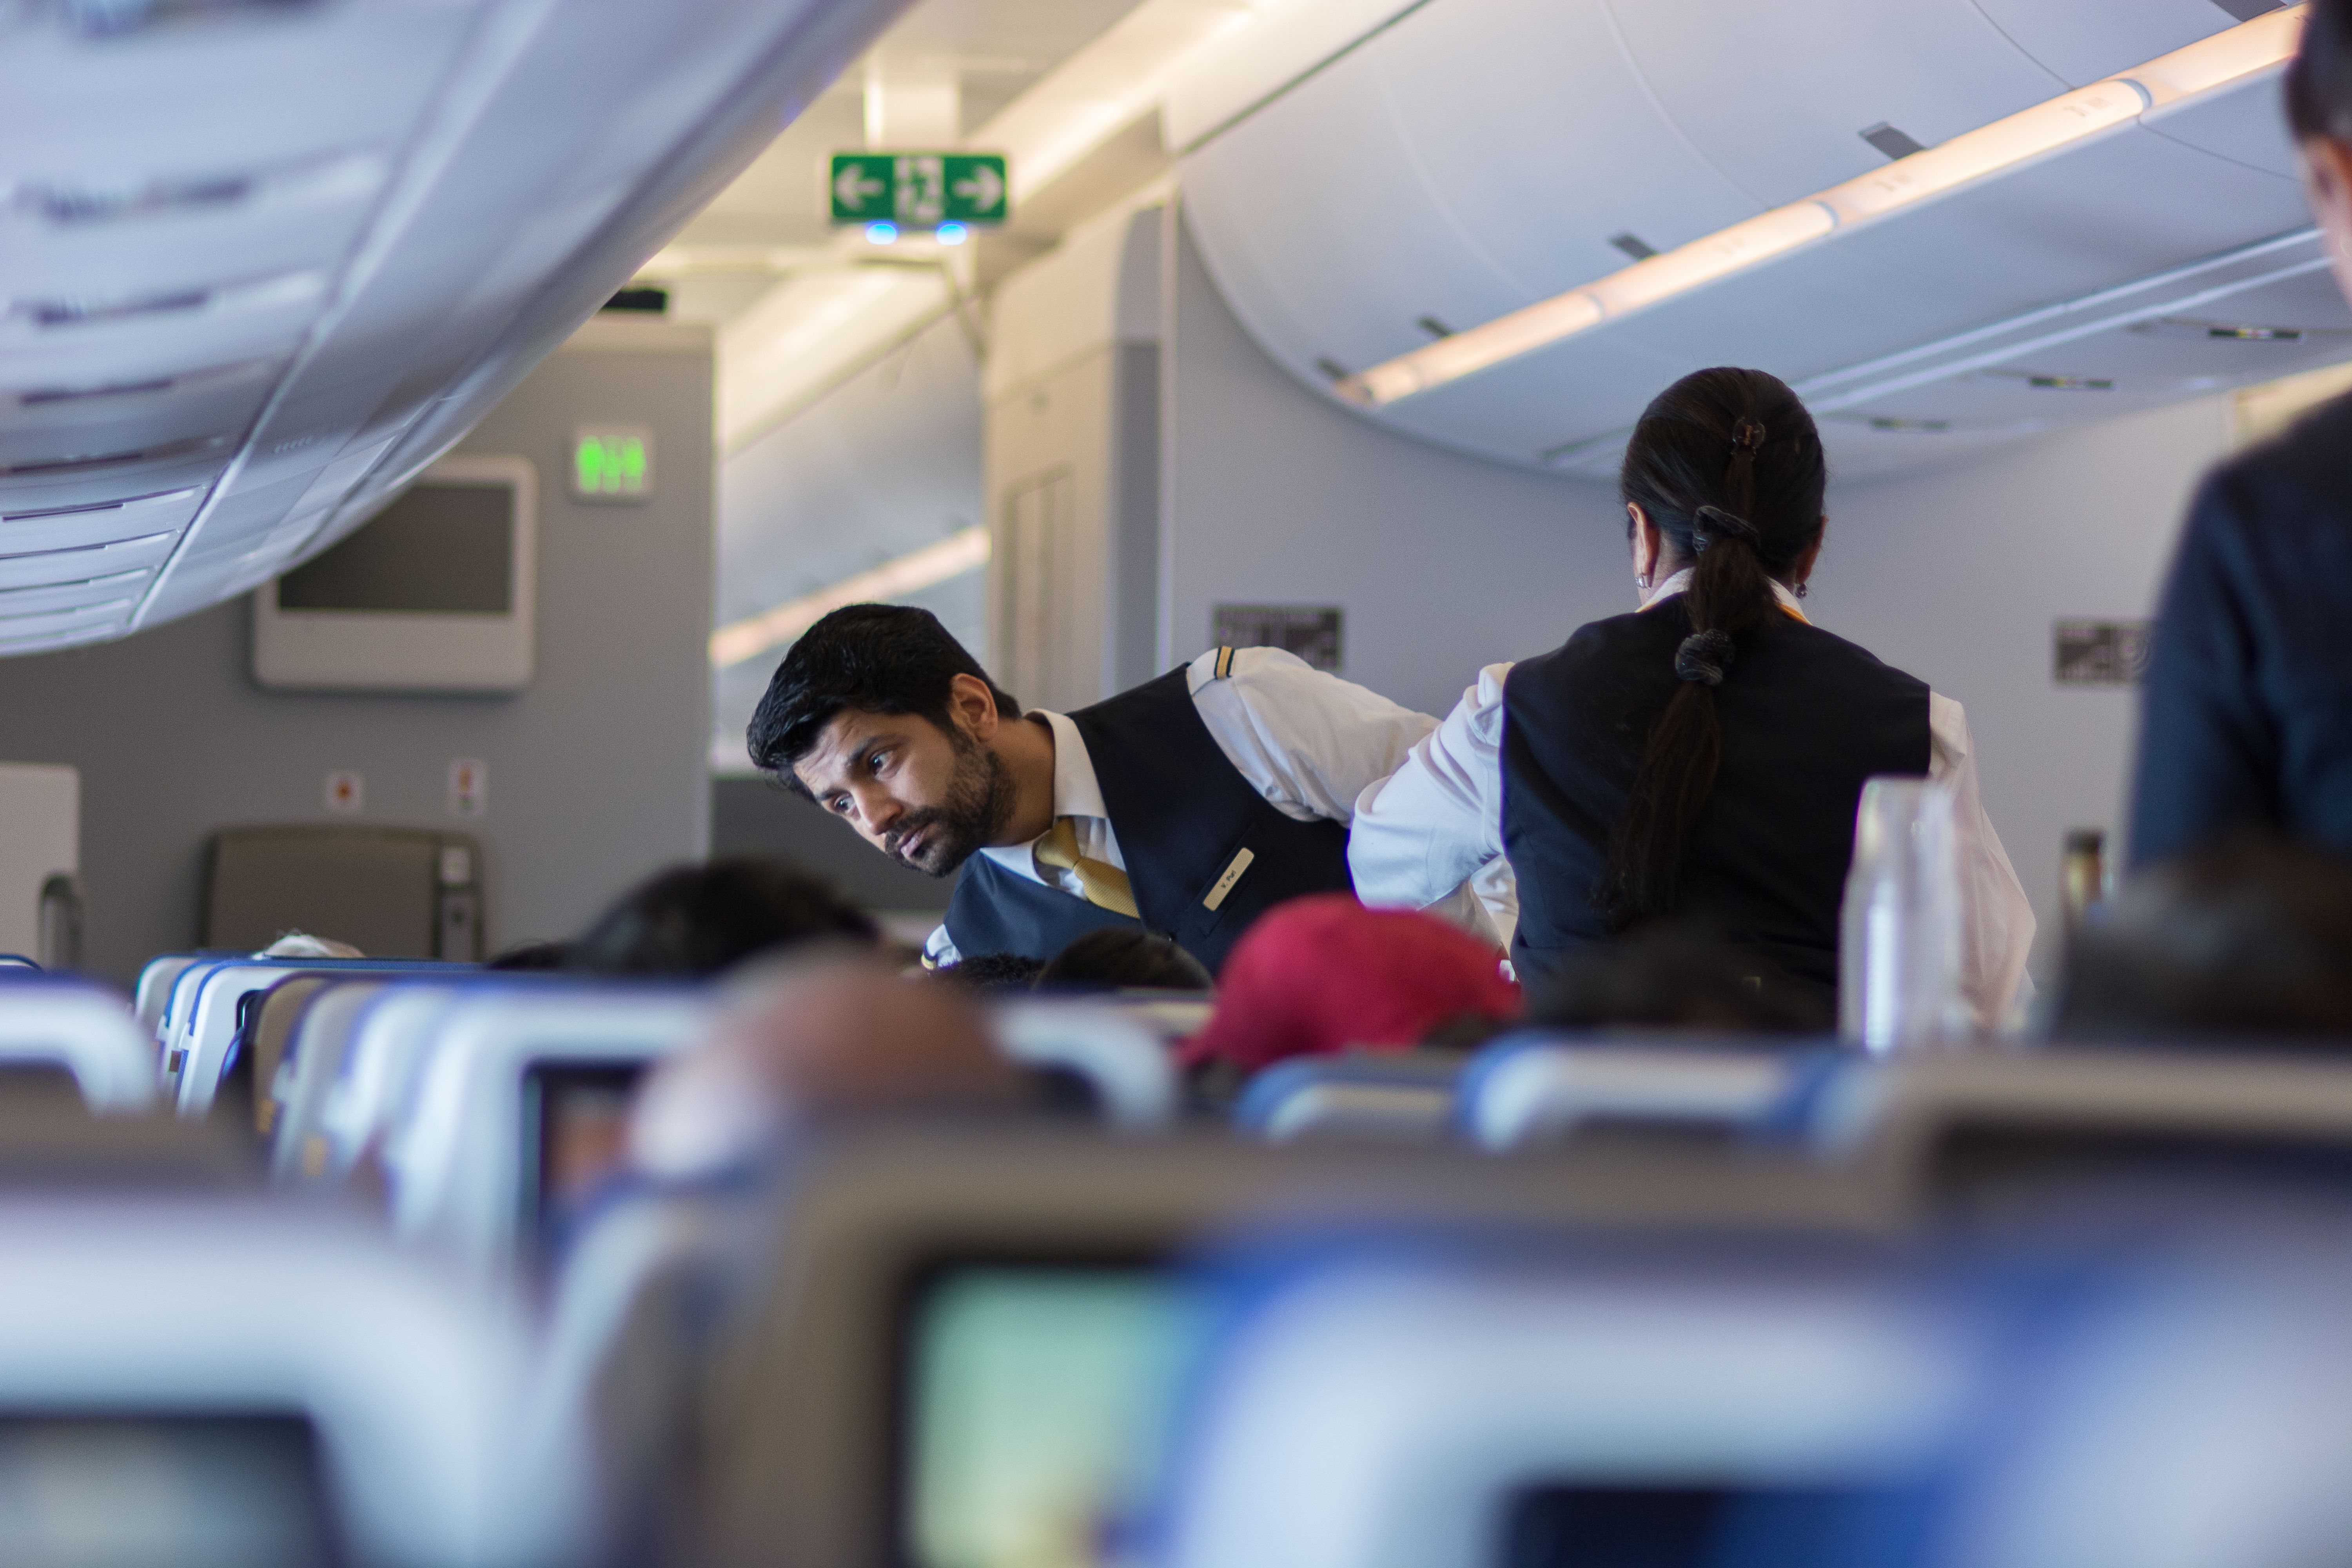 Lufthansa flight attendant speaking with a passenger.